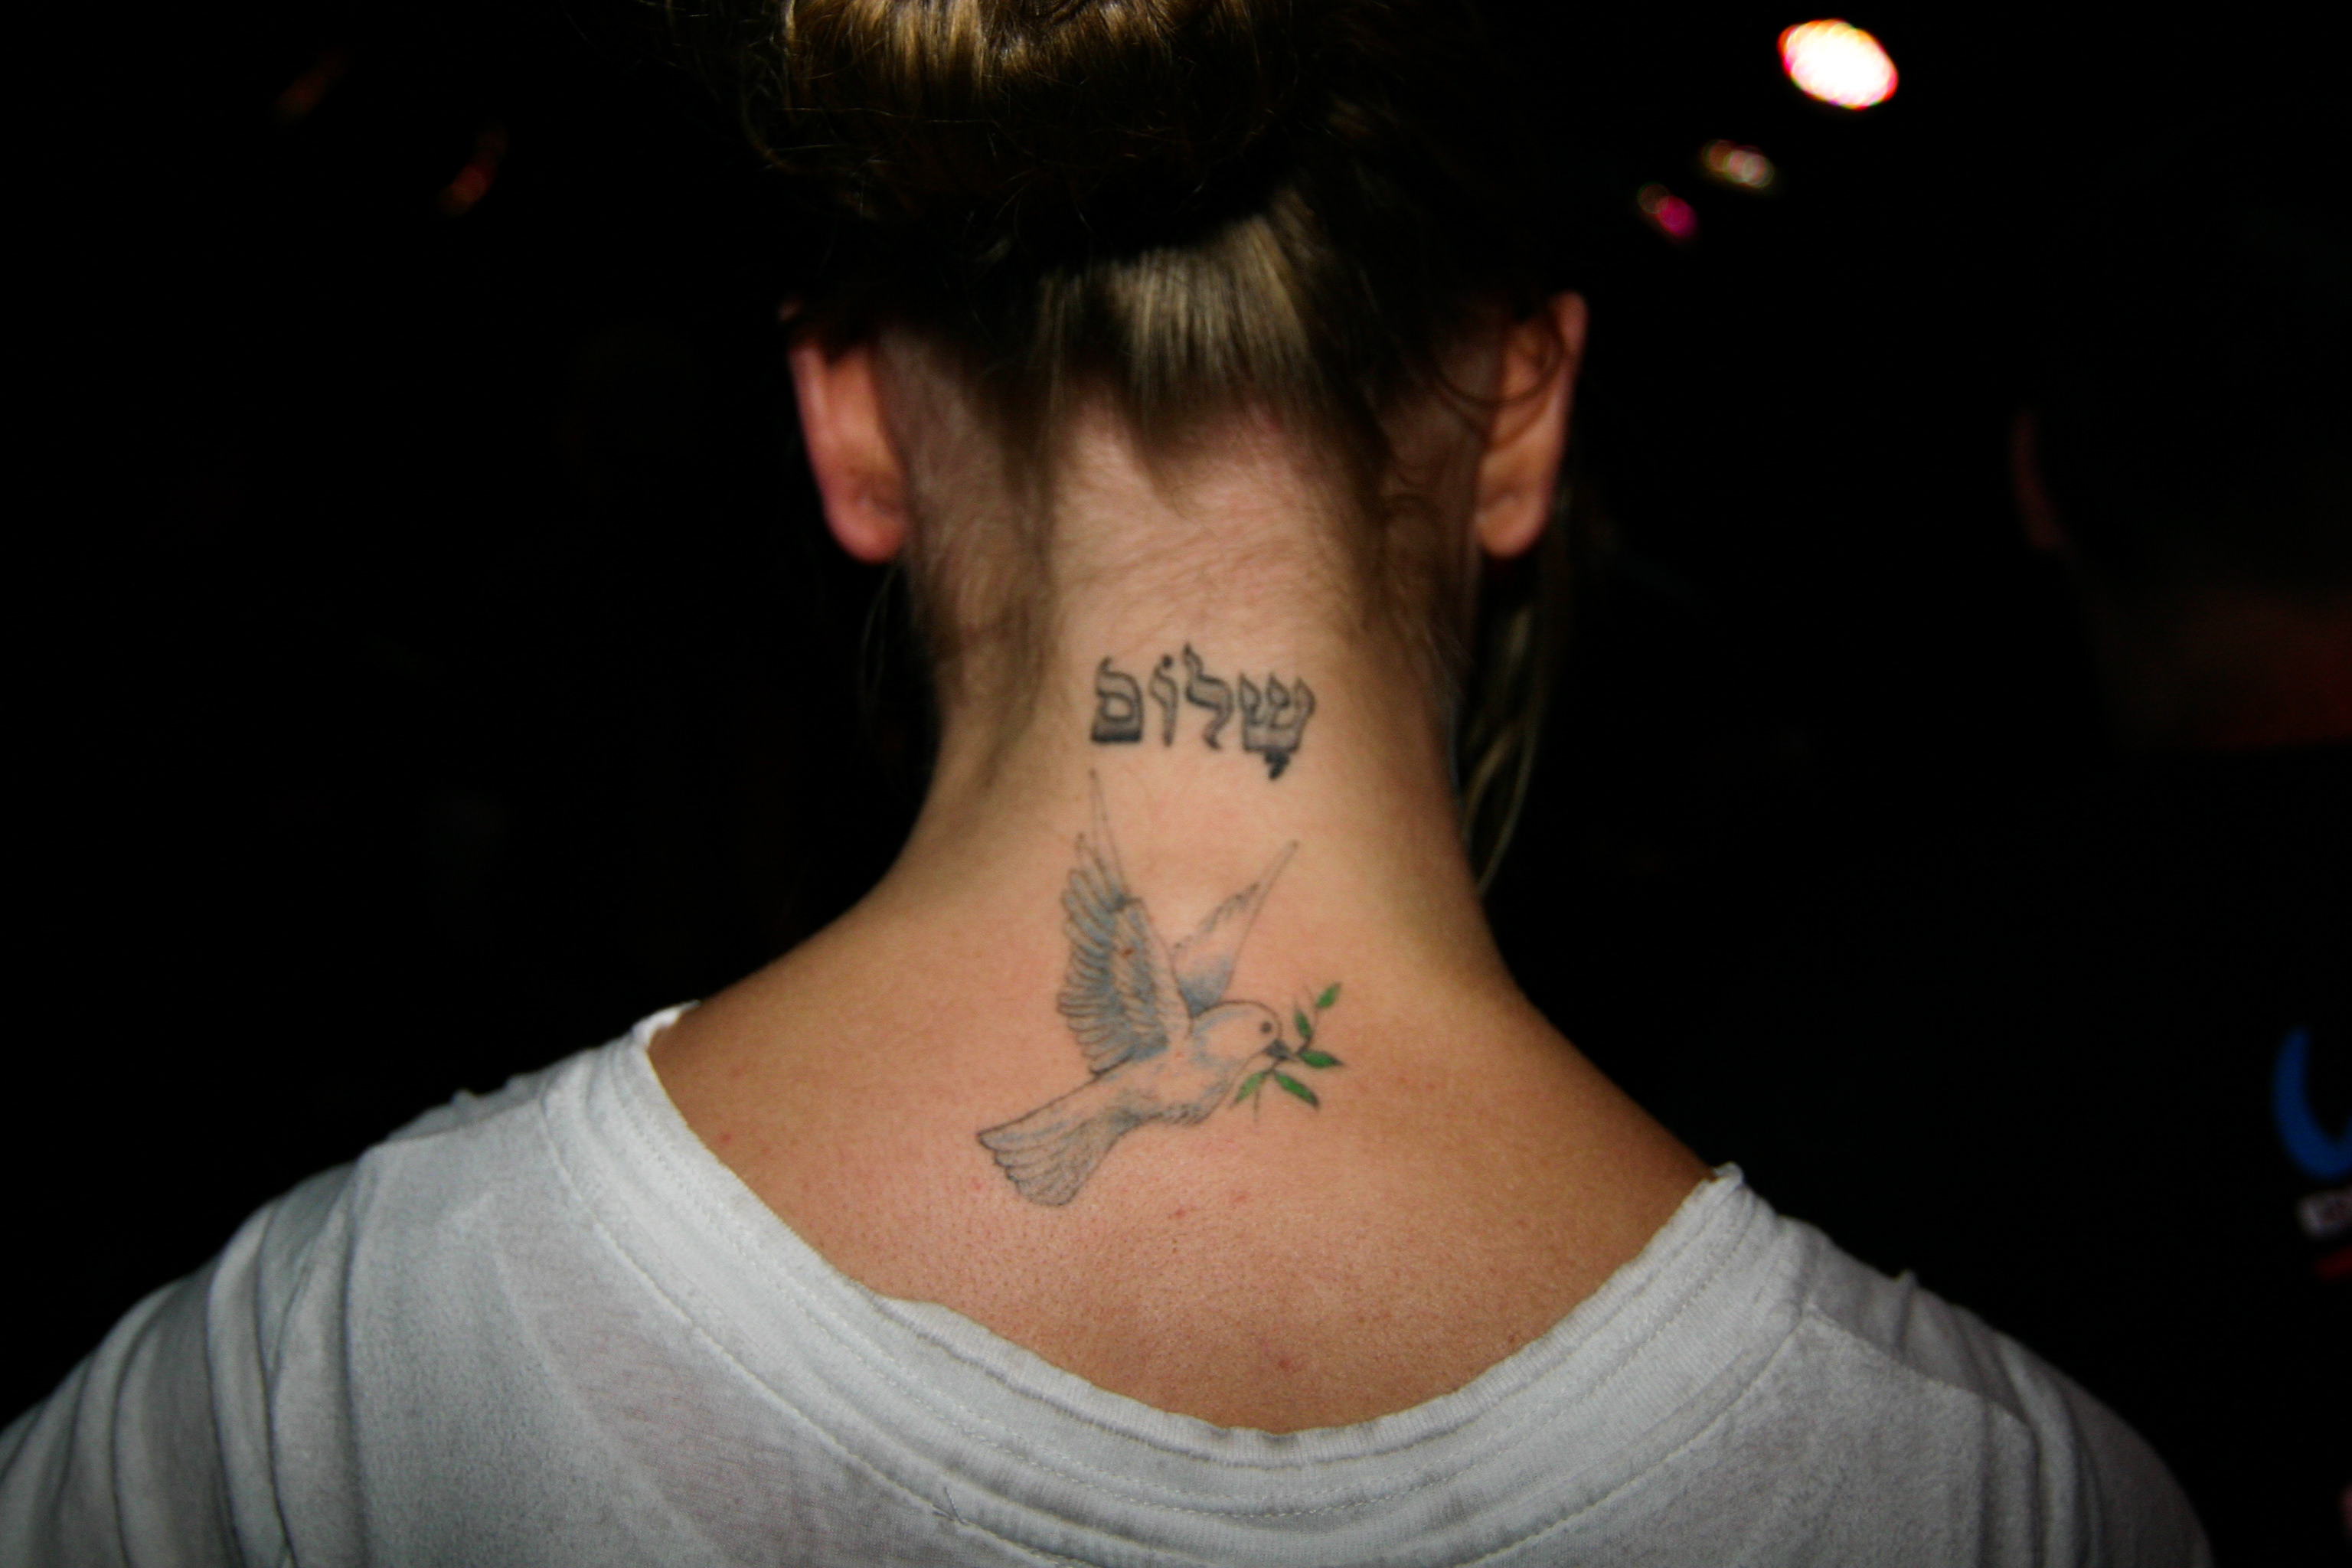 dove neck tattoo